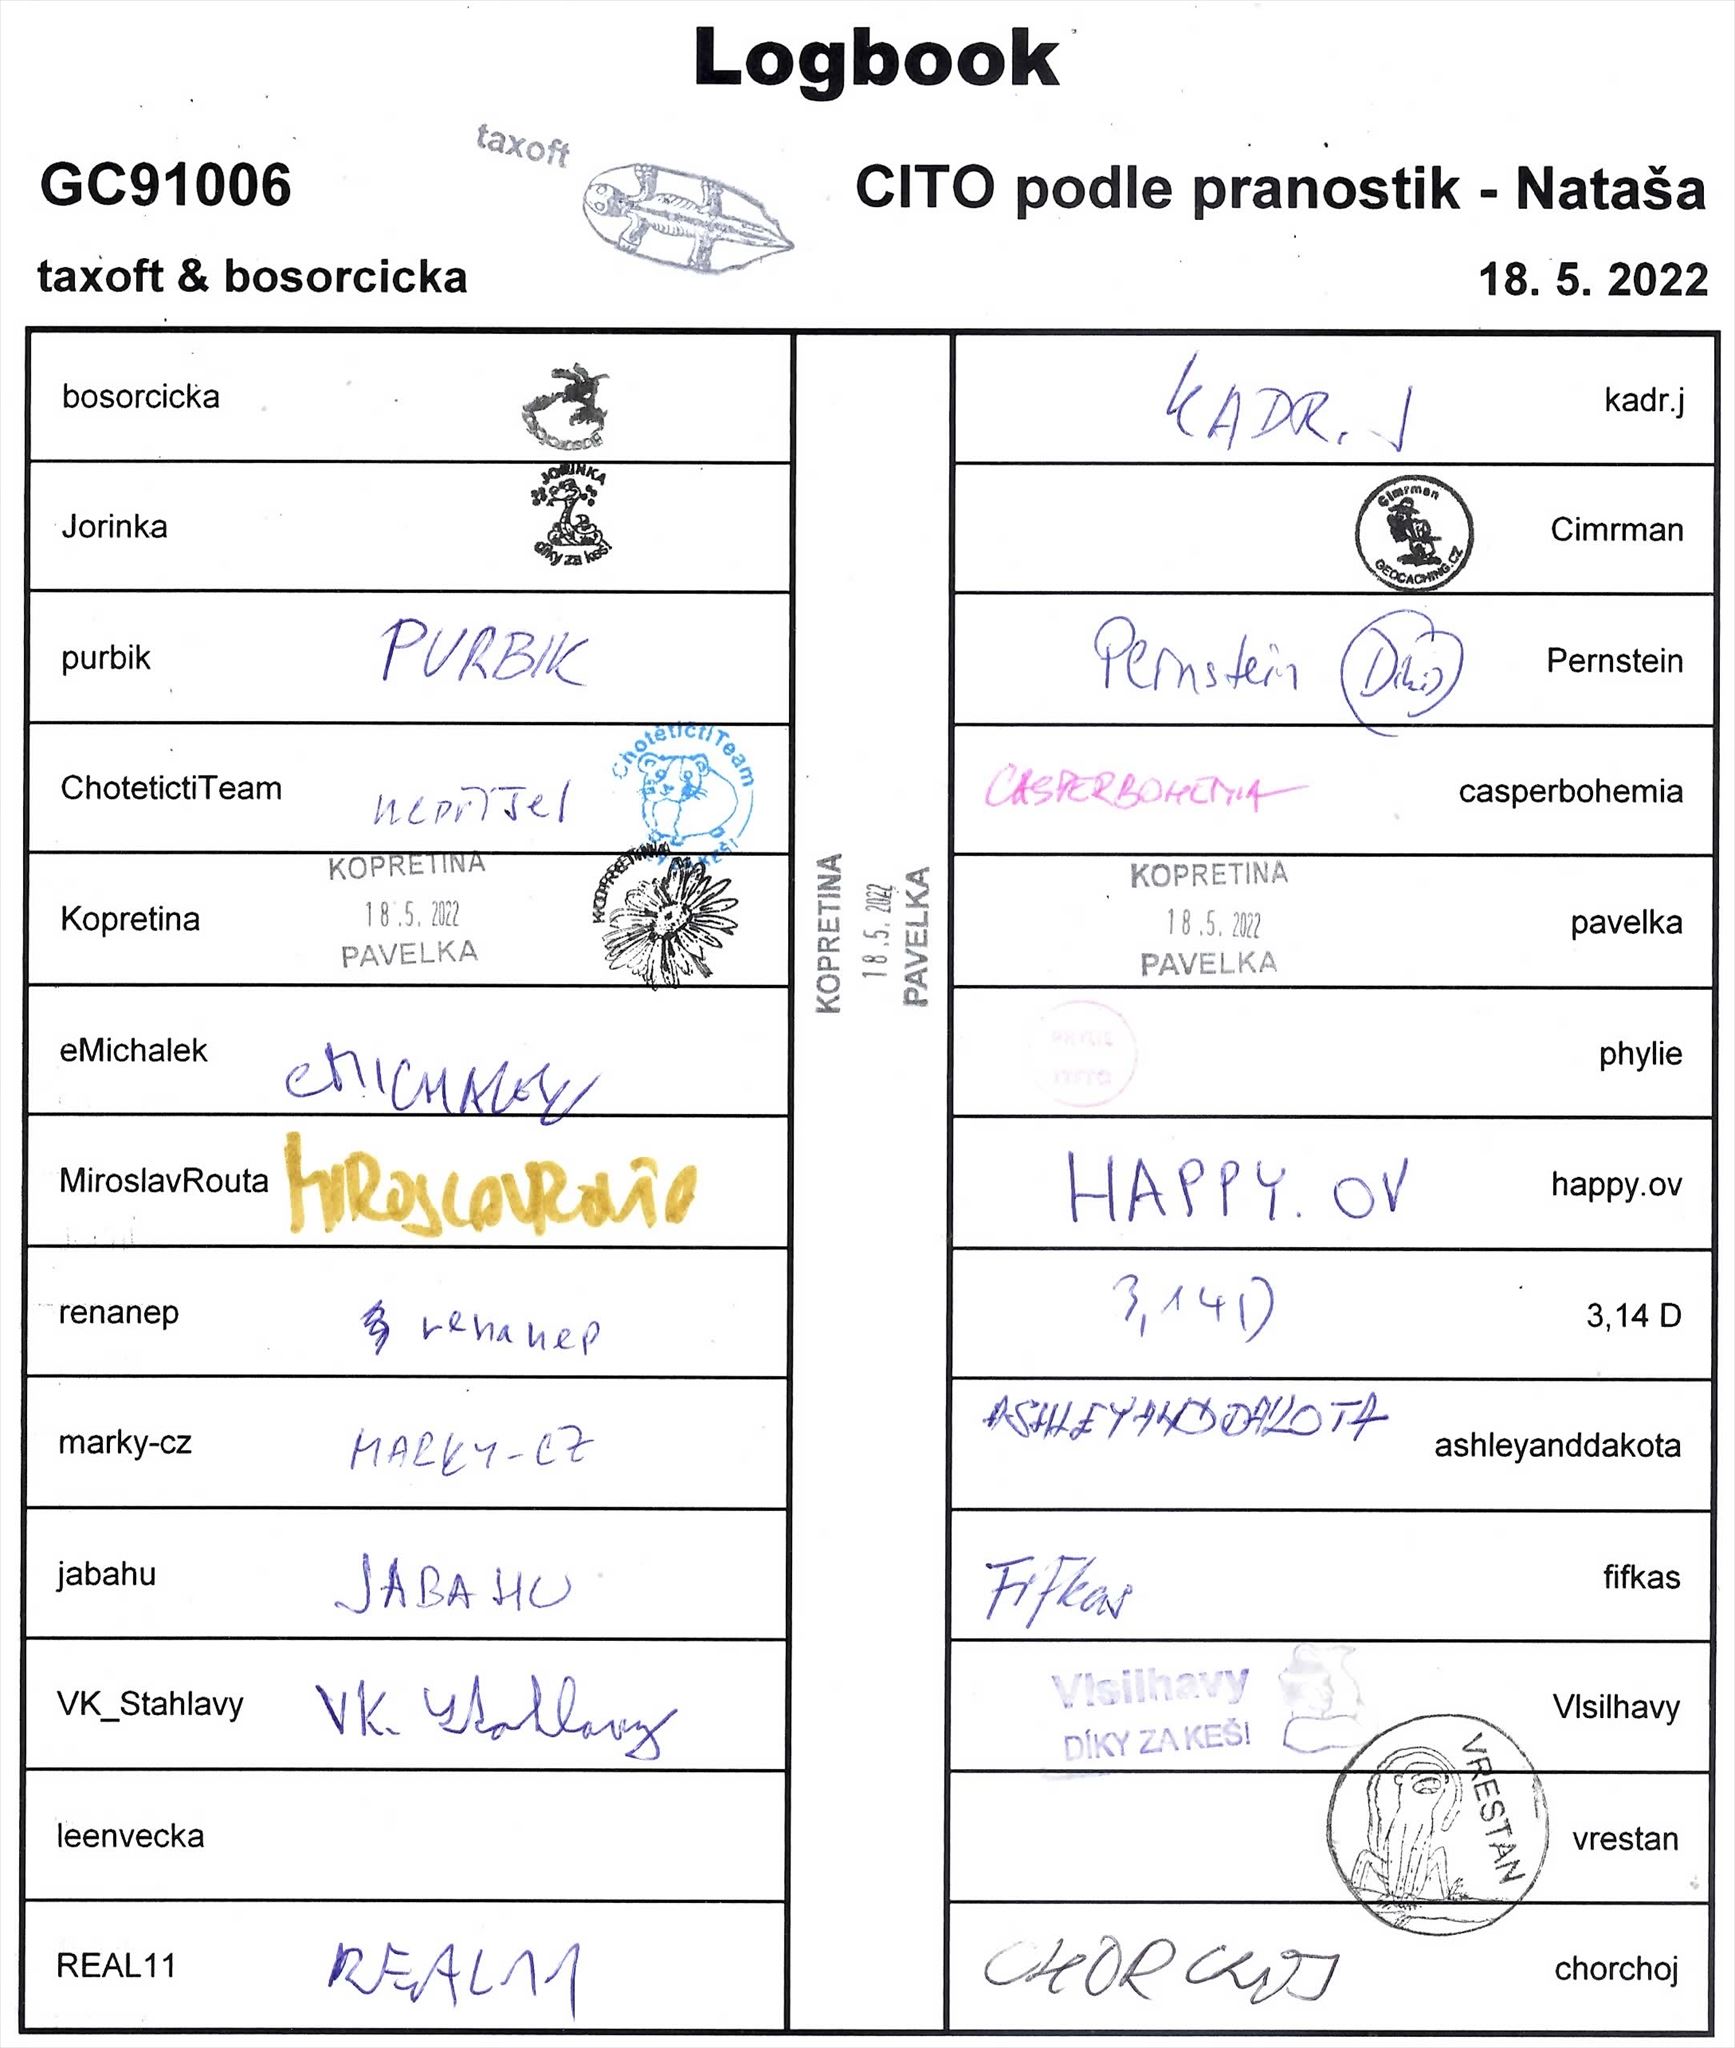 GC91006 - CITO podle pranostik - Nataša - logbook